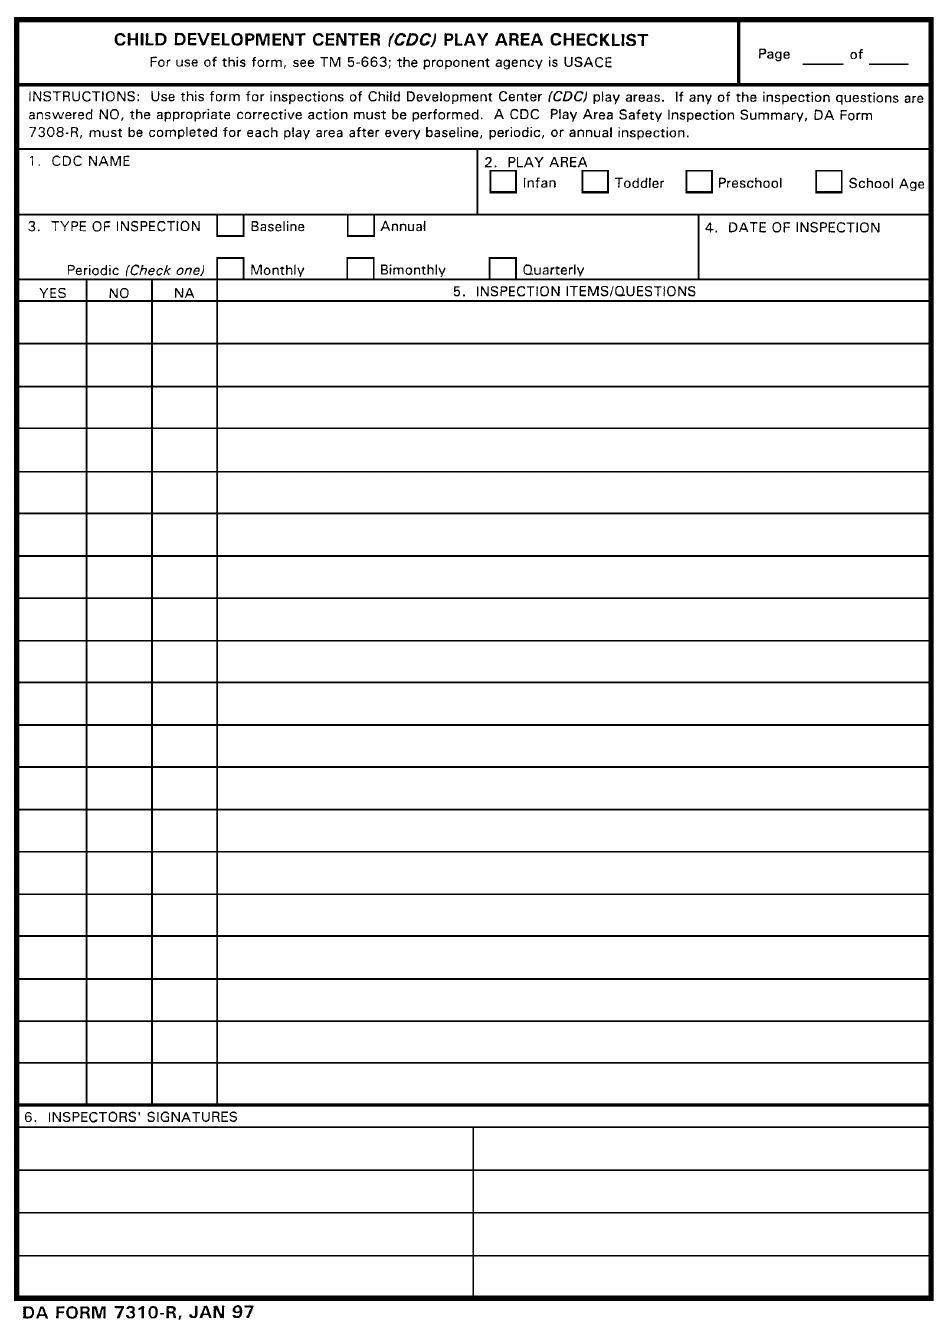 DA Form 7310-R Child Development (CDC) Play Area Checklist Form, Page 1